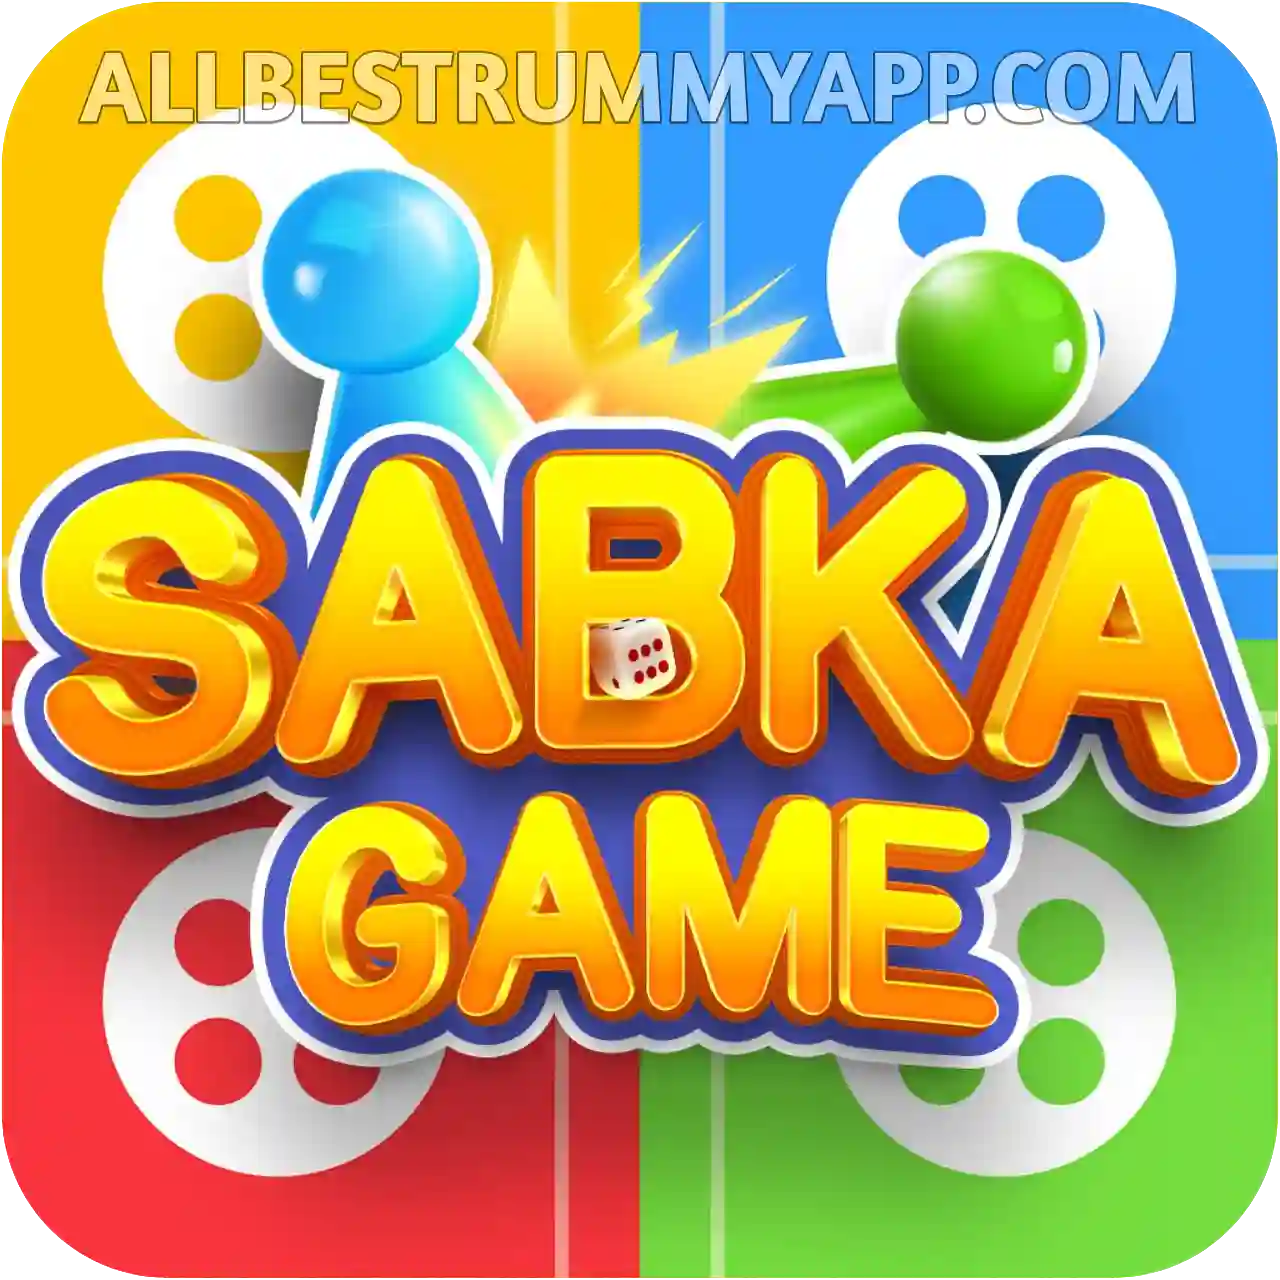 Sabka Game - All Best Rummy App